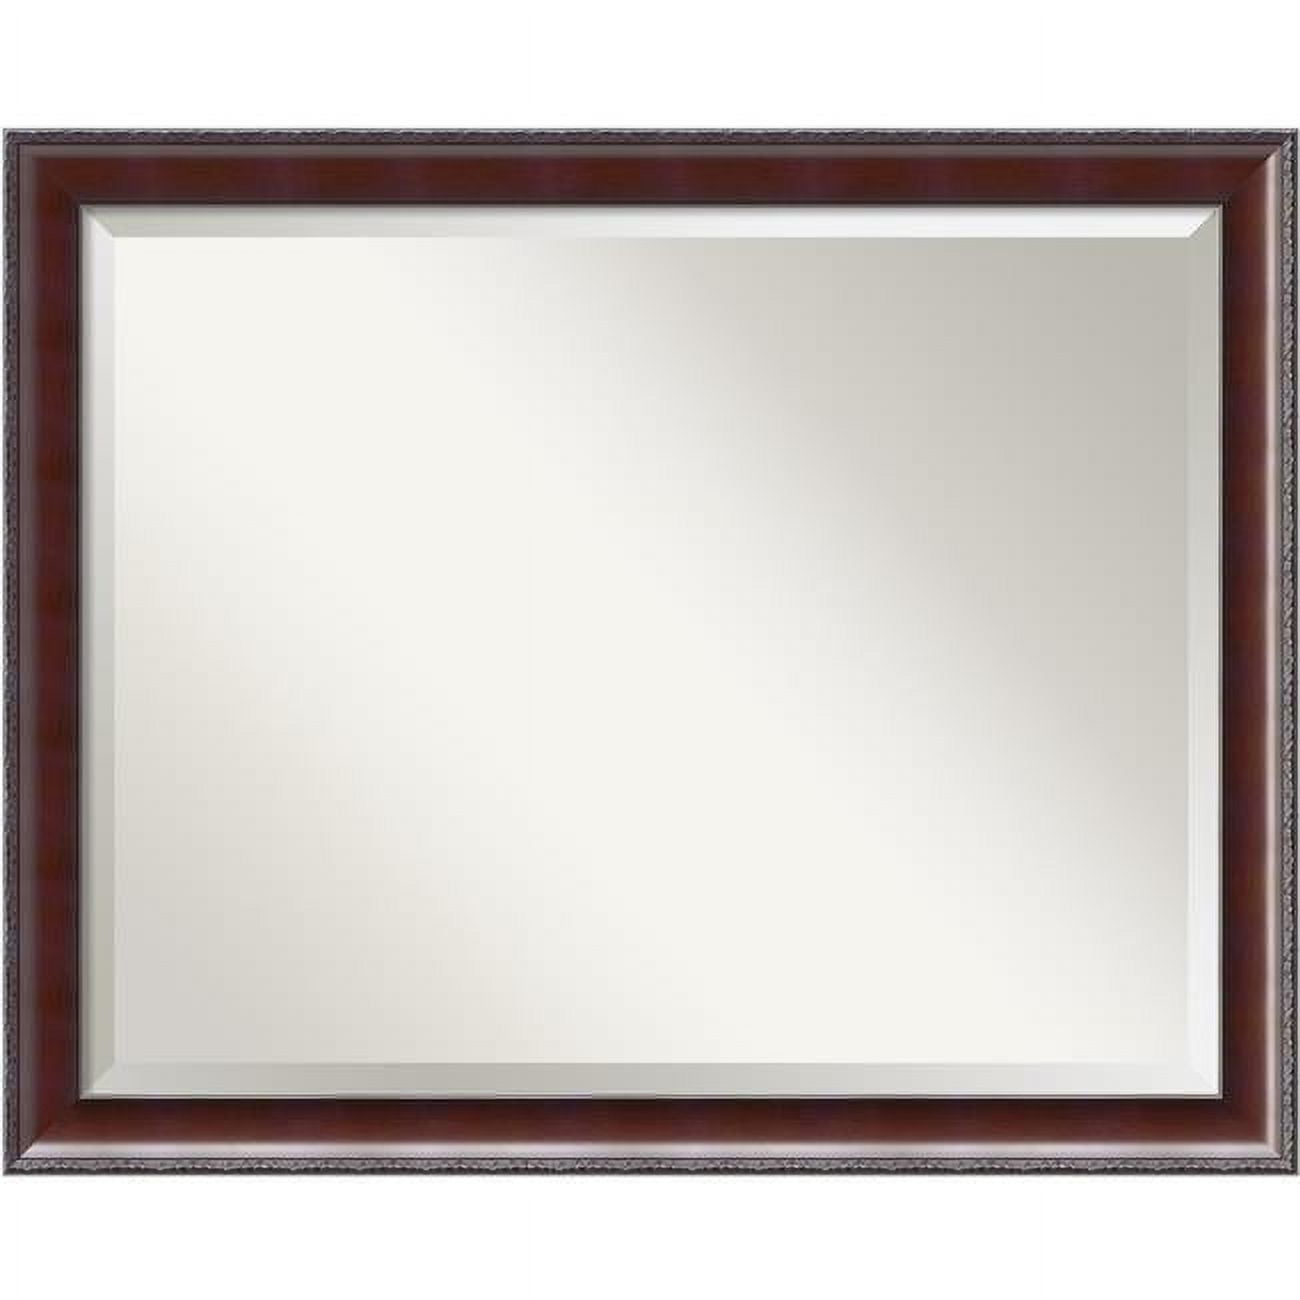 Bellaterra Home 202140-m-w Wood Frame Mirror, Walnut